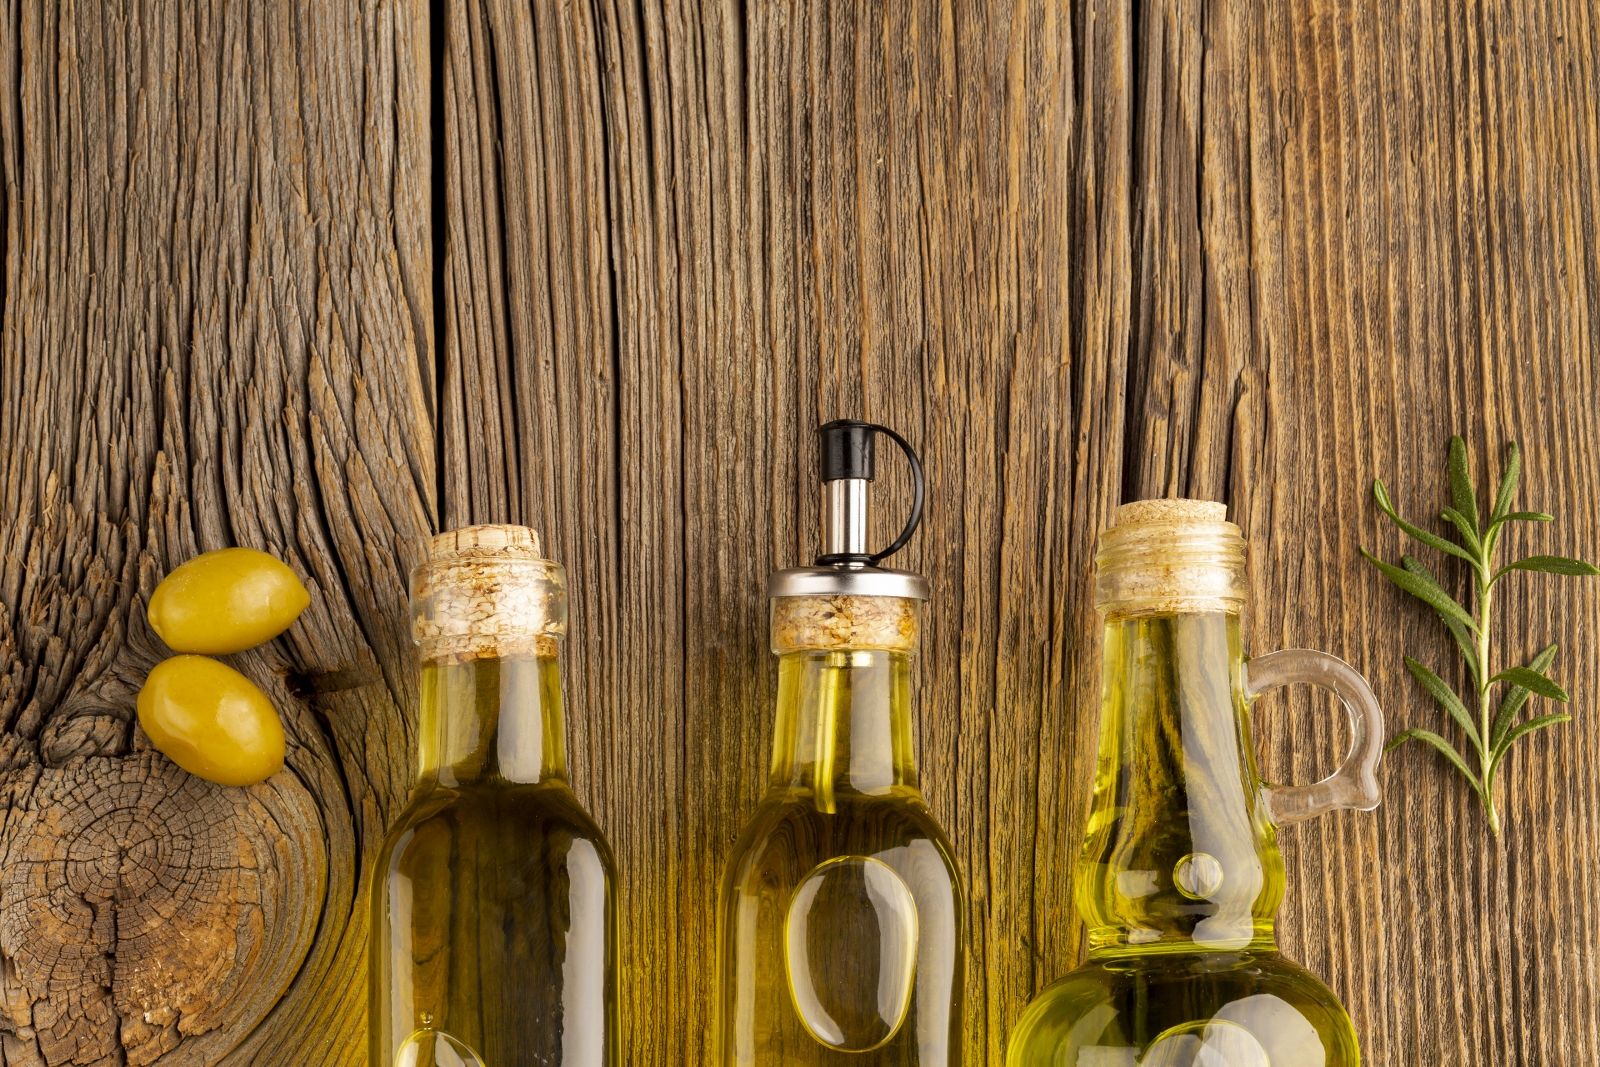 yellow-olives-oil-bottles-wooden-background_1600x1067.jpg